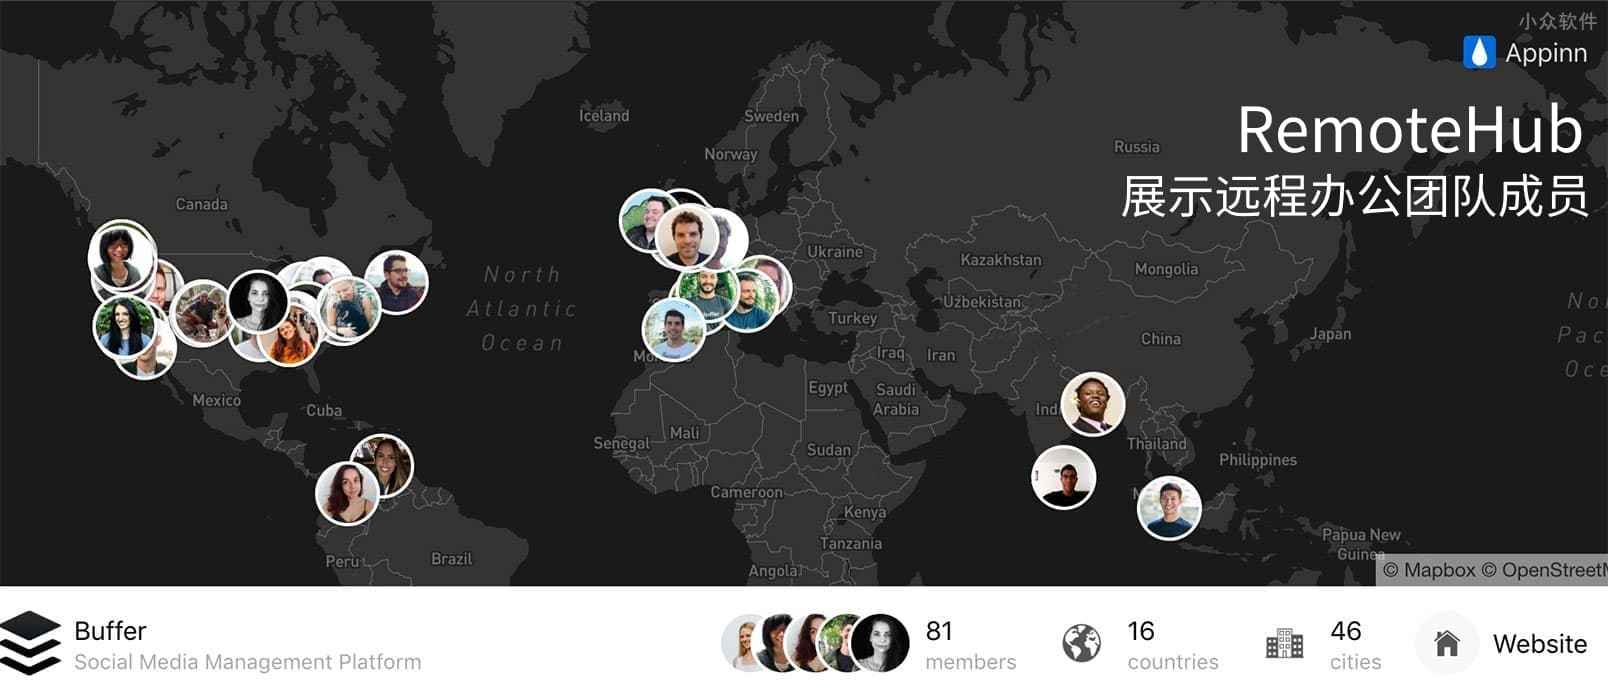 RemoteHub – 在地图上显示远程团队成员时区和天气